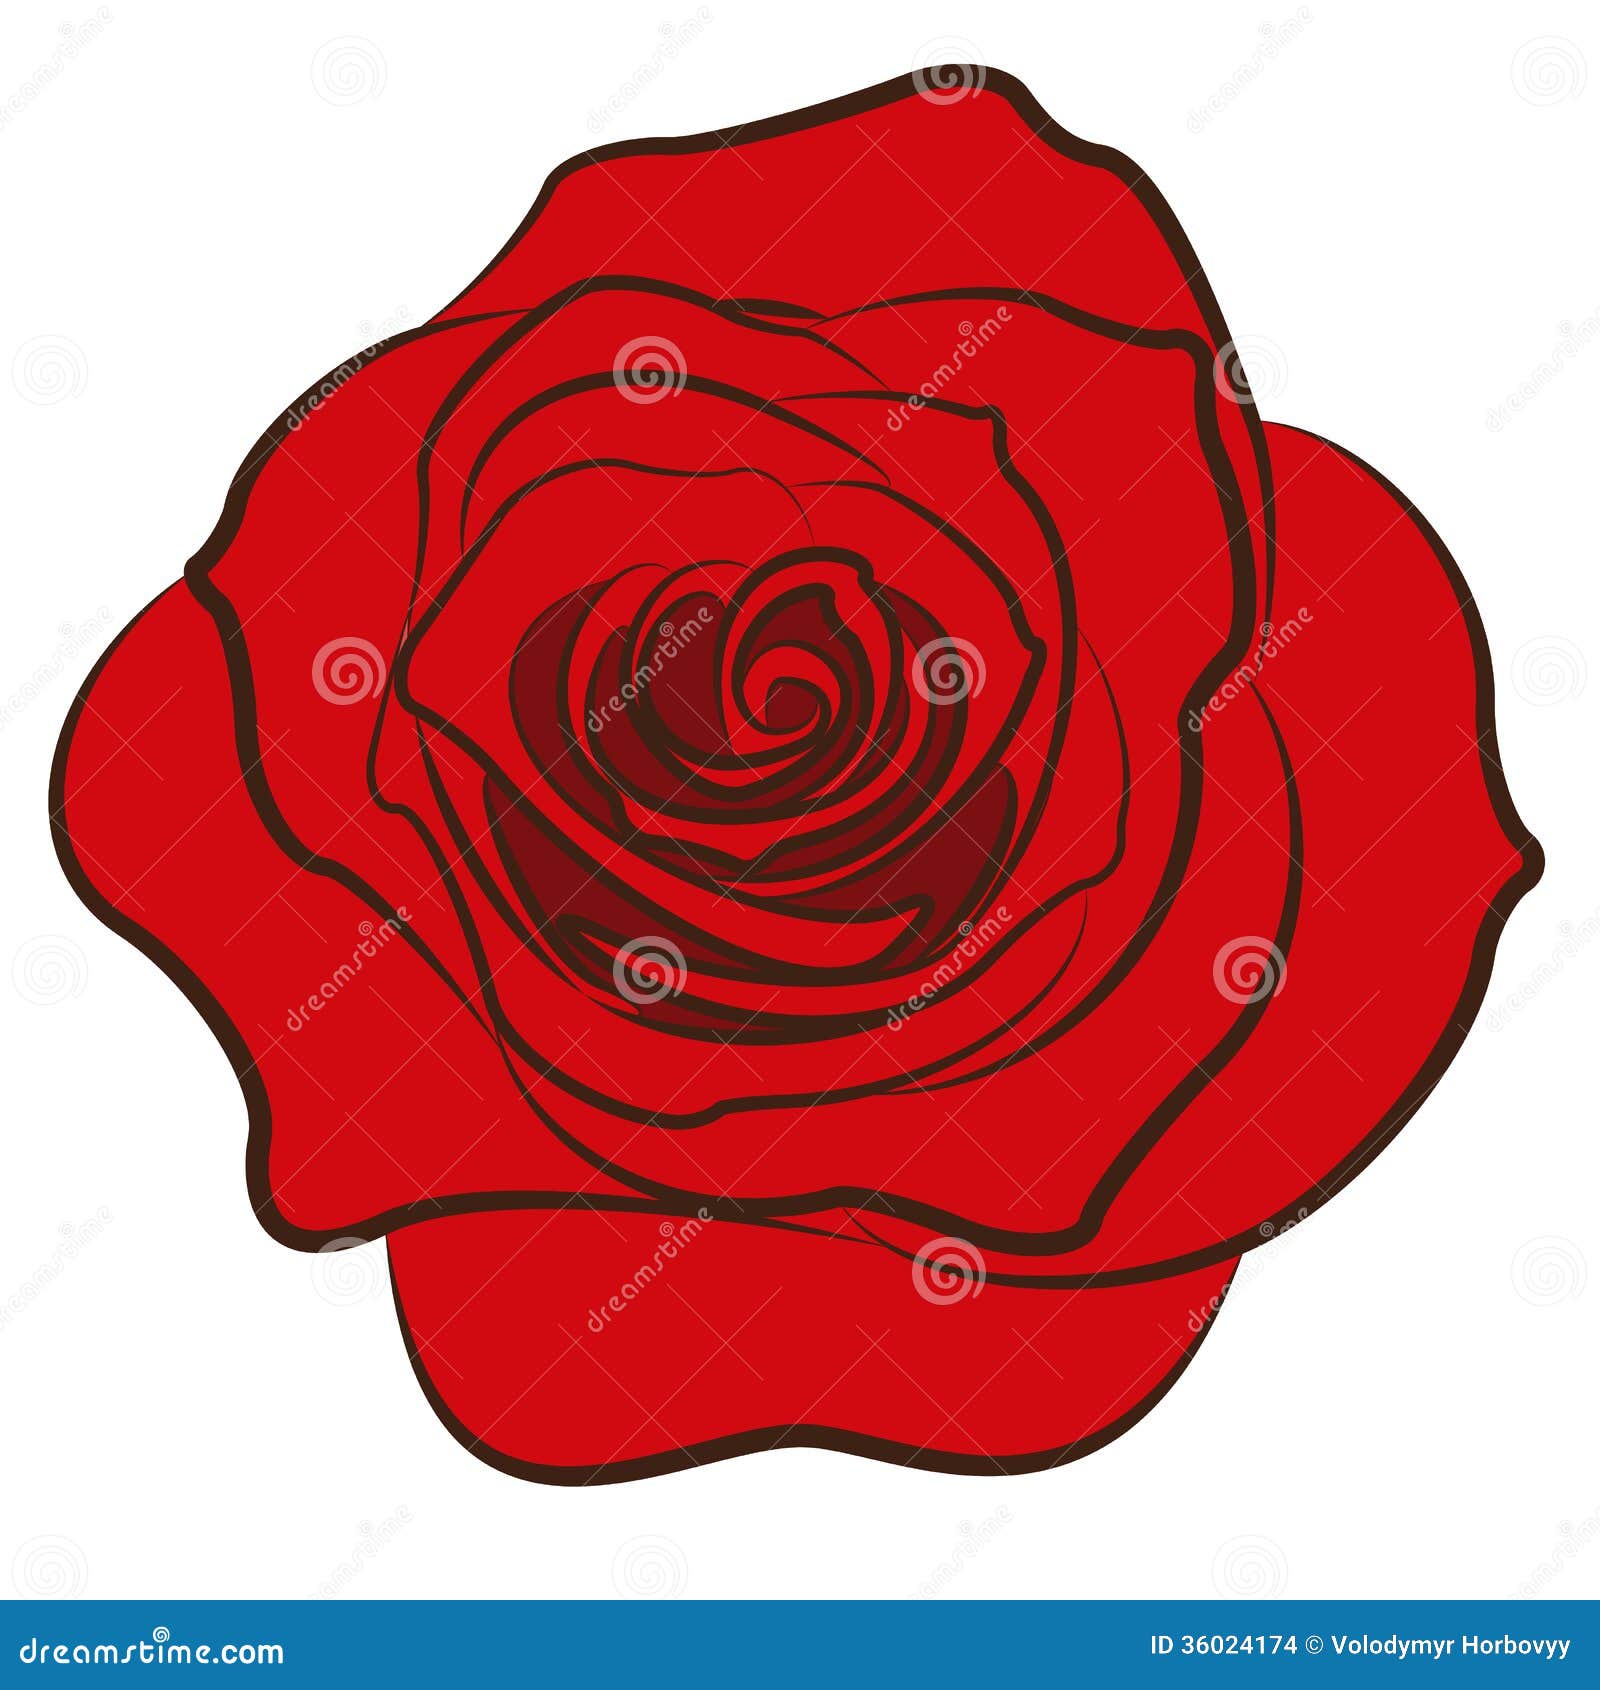 rose clip art vector - photo #34